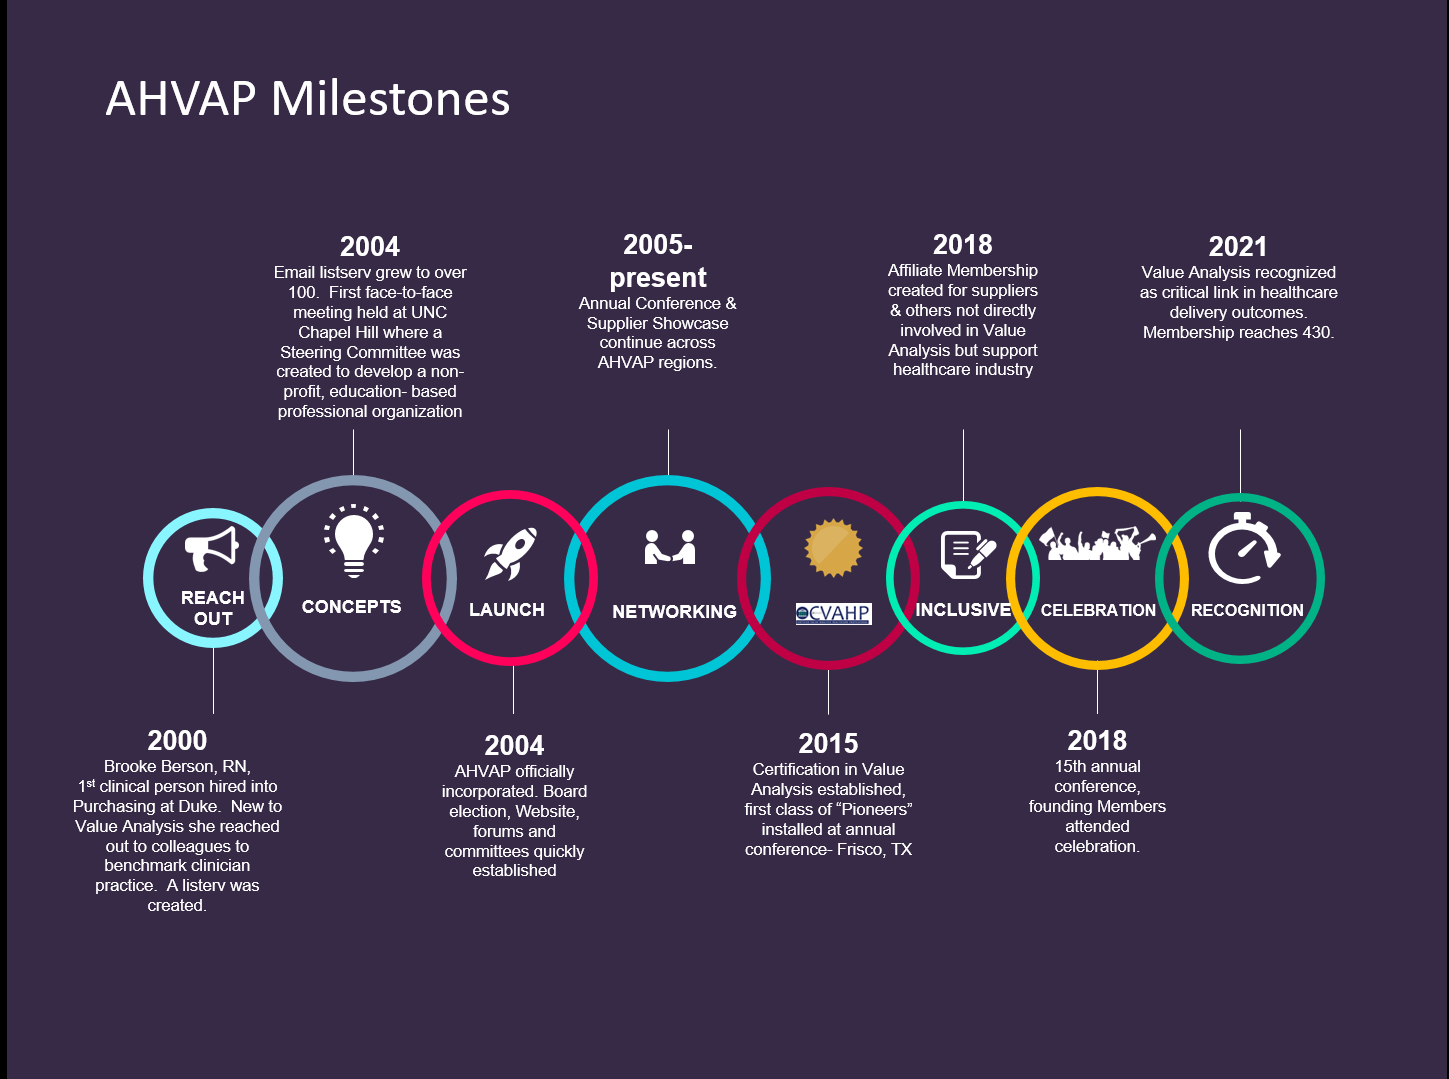 Evolution of AHVAP